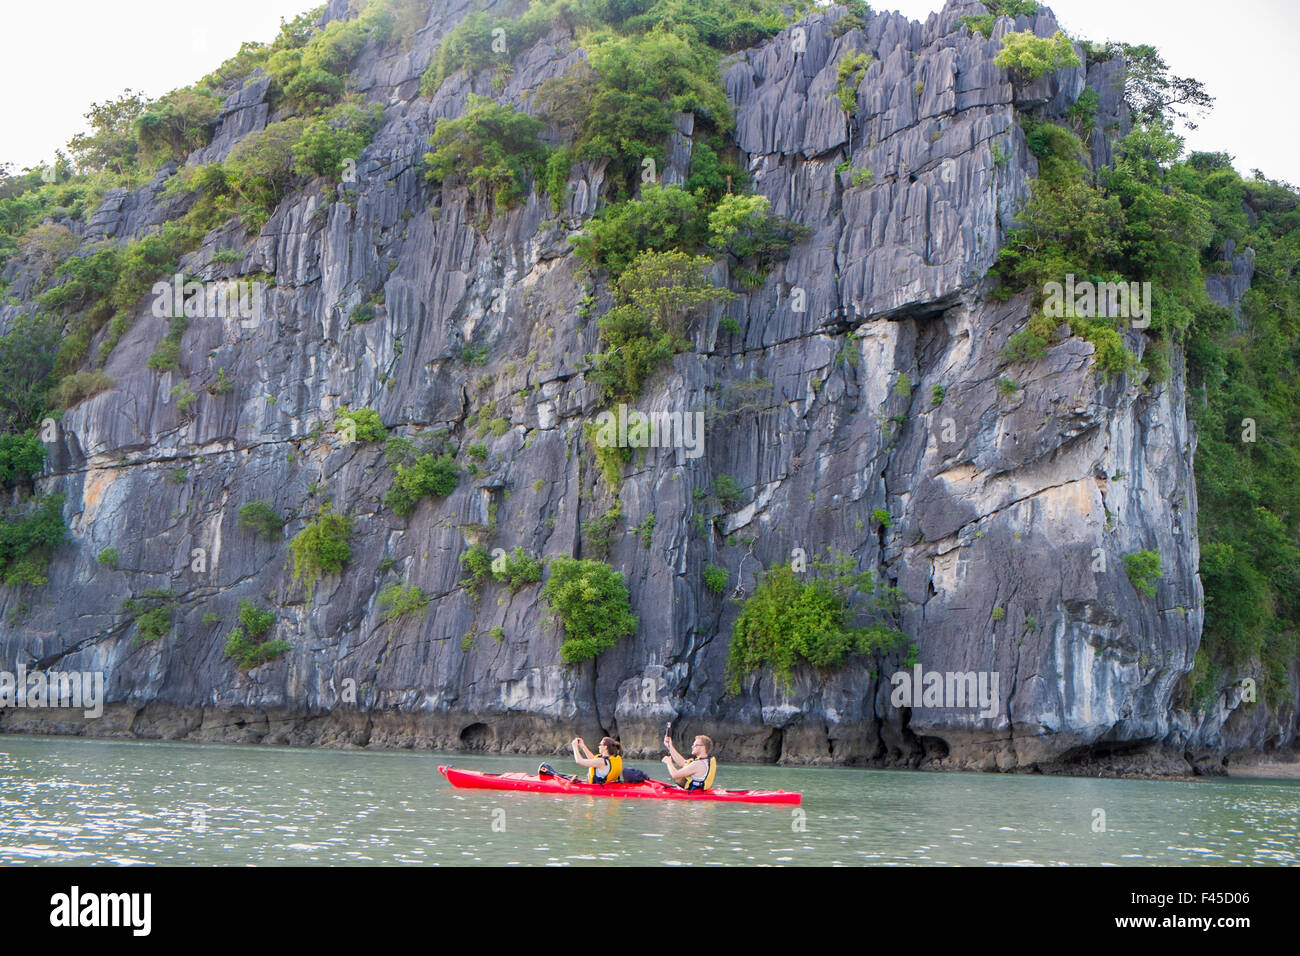 Two people in a kayak near Cang Do island in Bai Tu long bay part of Halong Bay,Vietnam,Asia Stock Photo